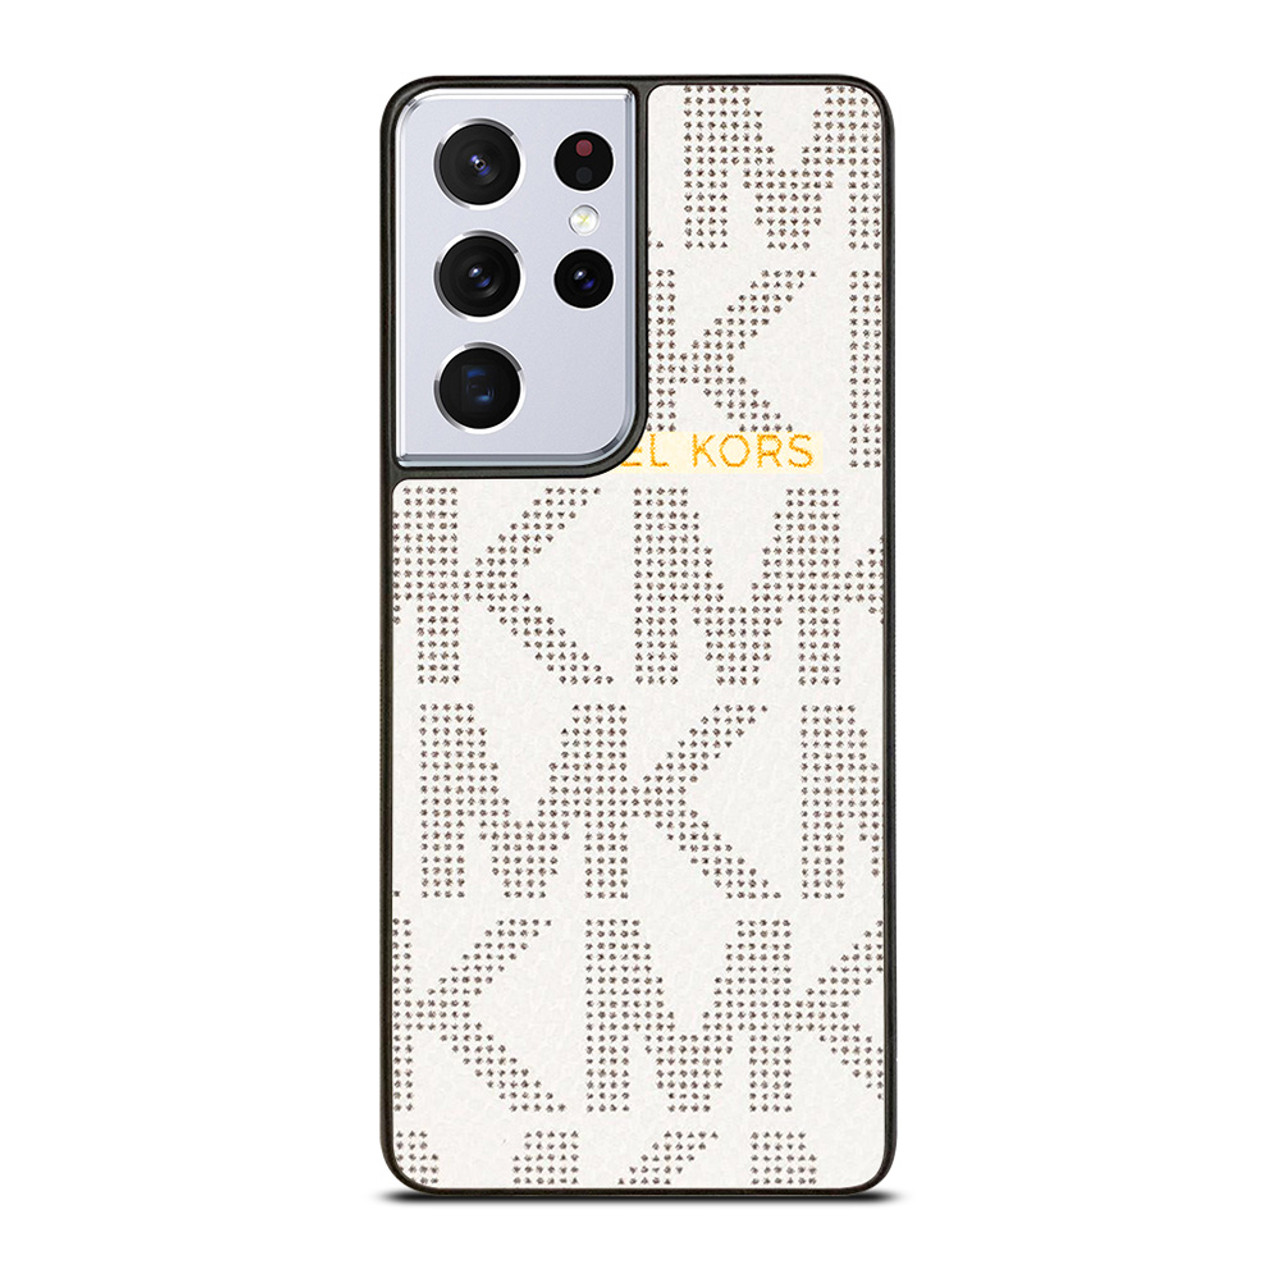 MICHAEL KORS MK POLKADOT Samsung Galaxy S20 Ultra Case Cover